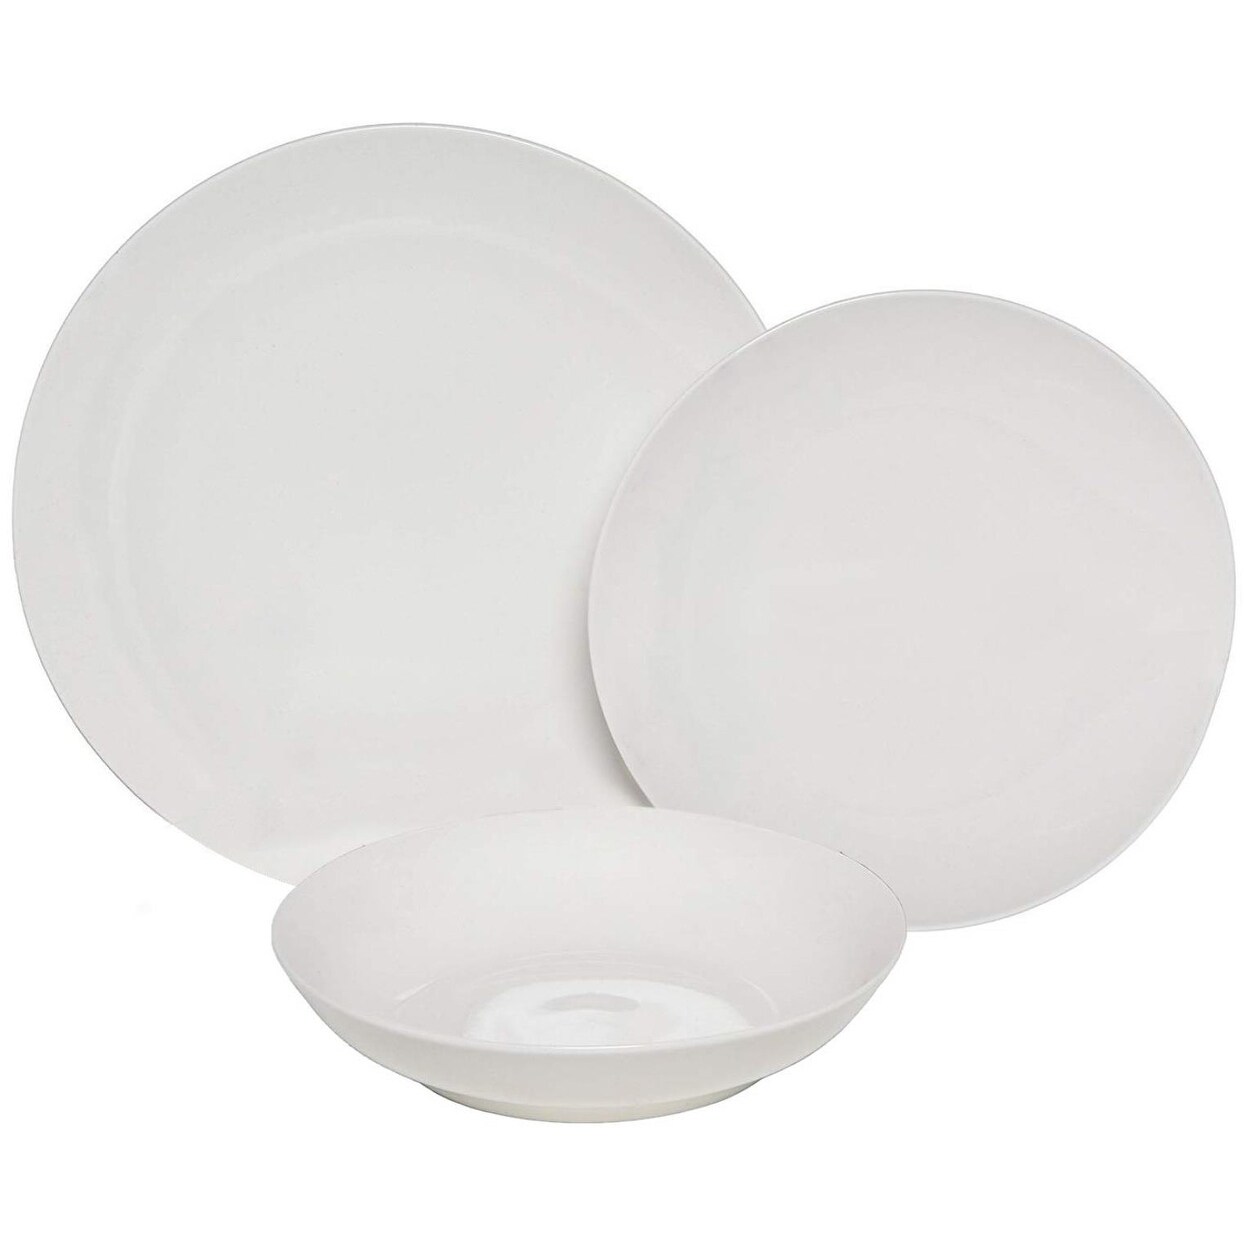 Melange Coupe 36-Pcs Porcelain Dinnerware Set (White), Service for